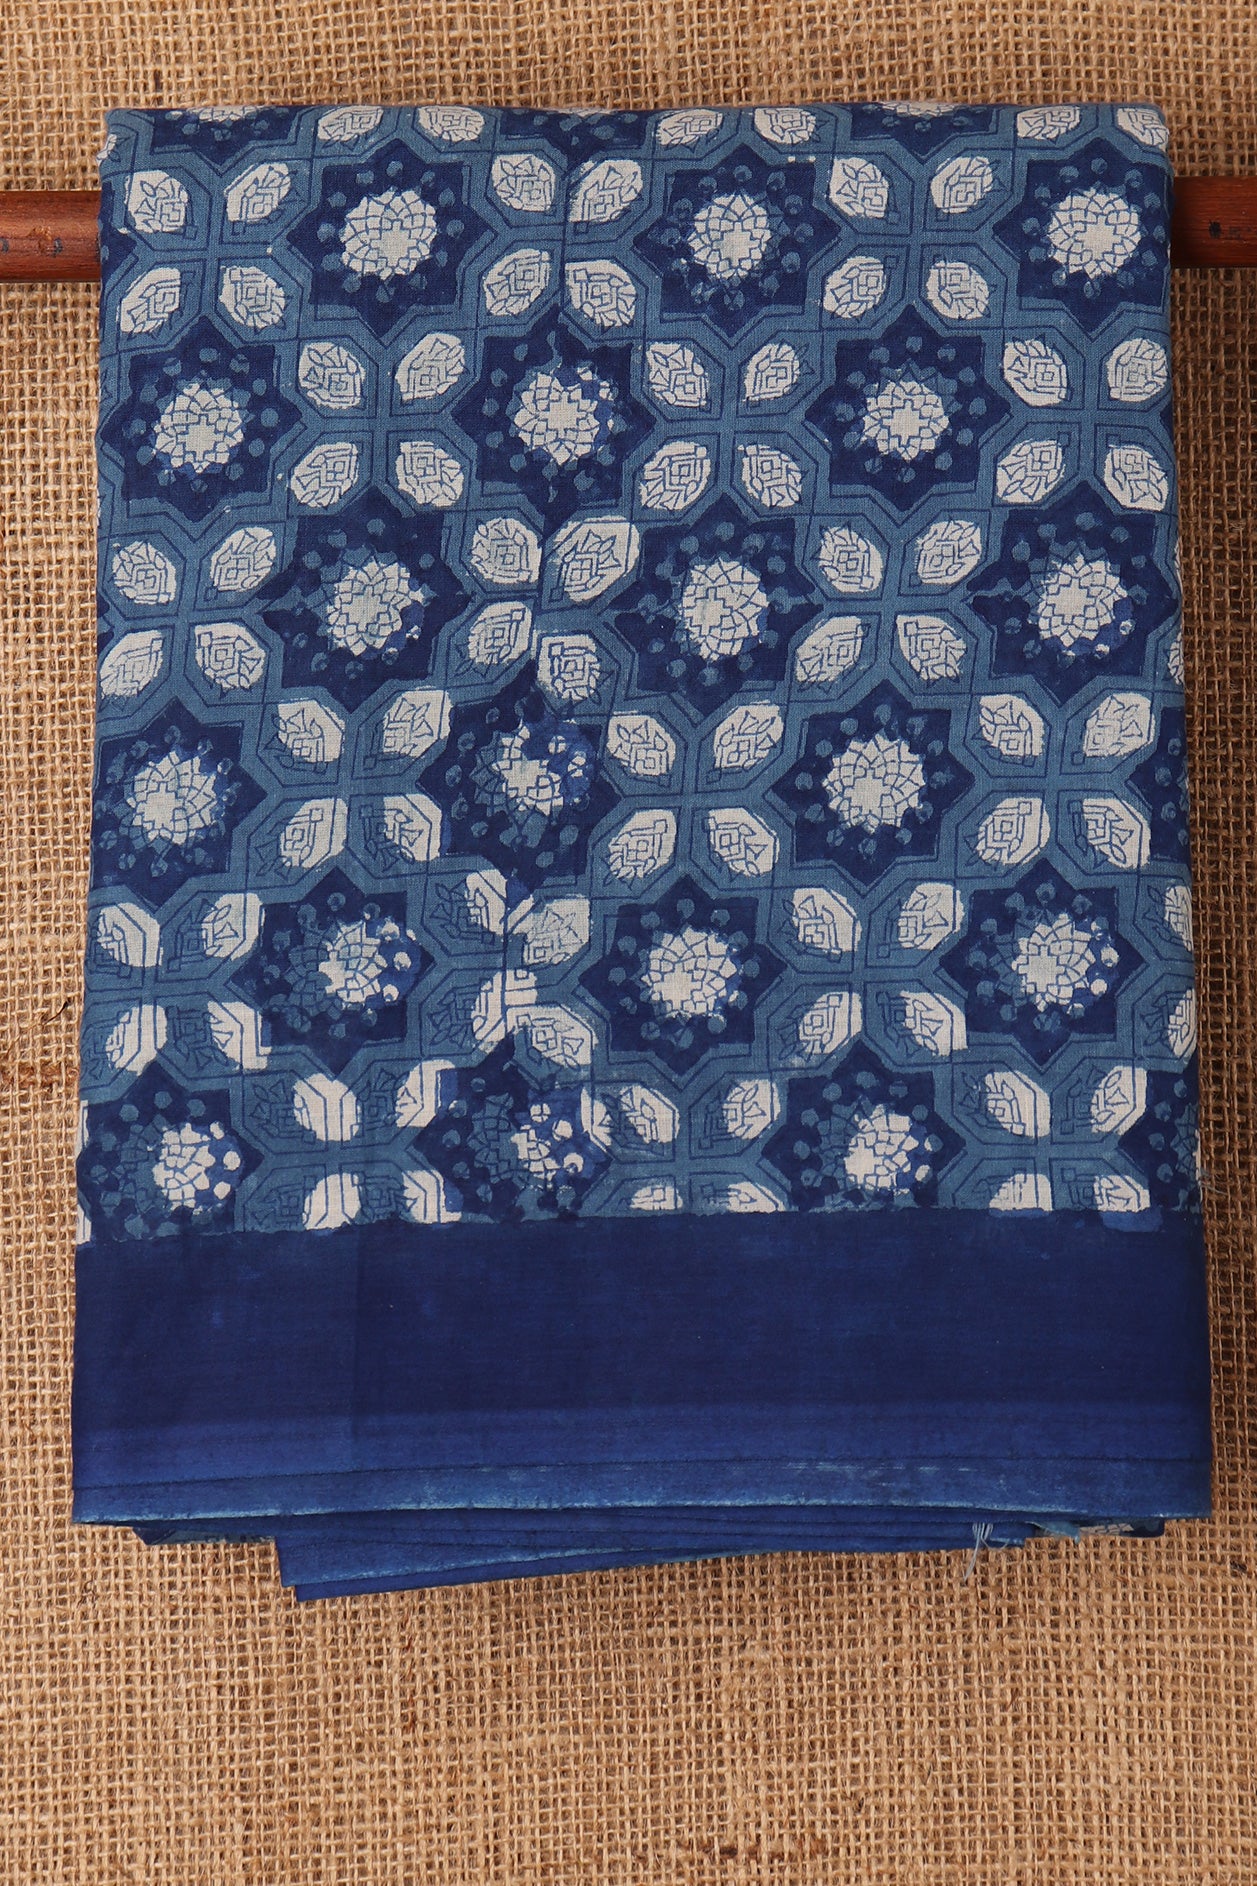 Floral Motif With Blue Jaipur Cotton Saree